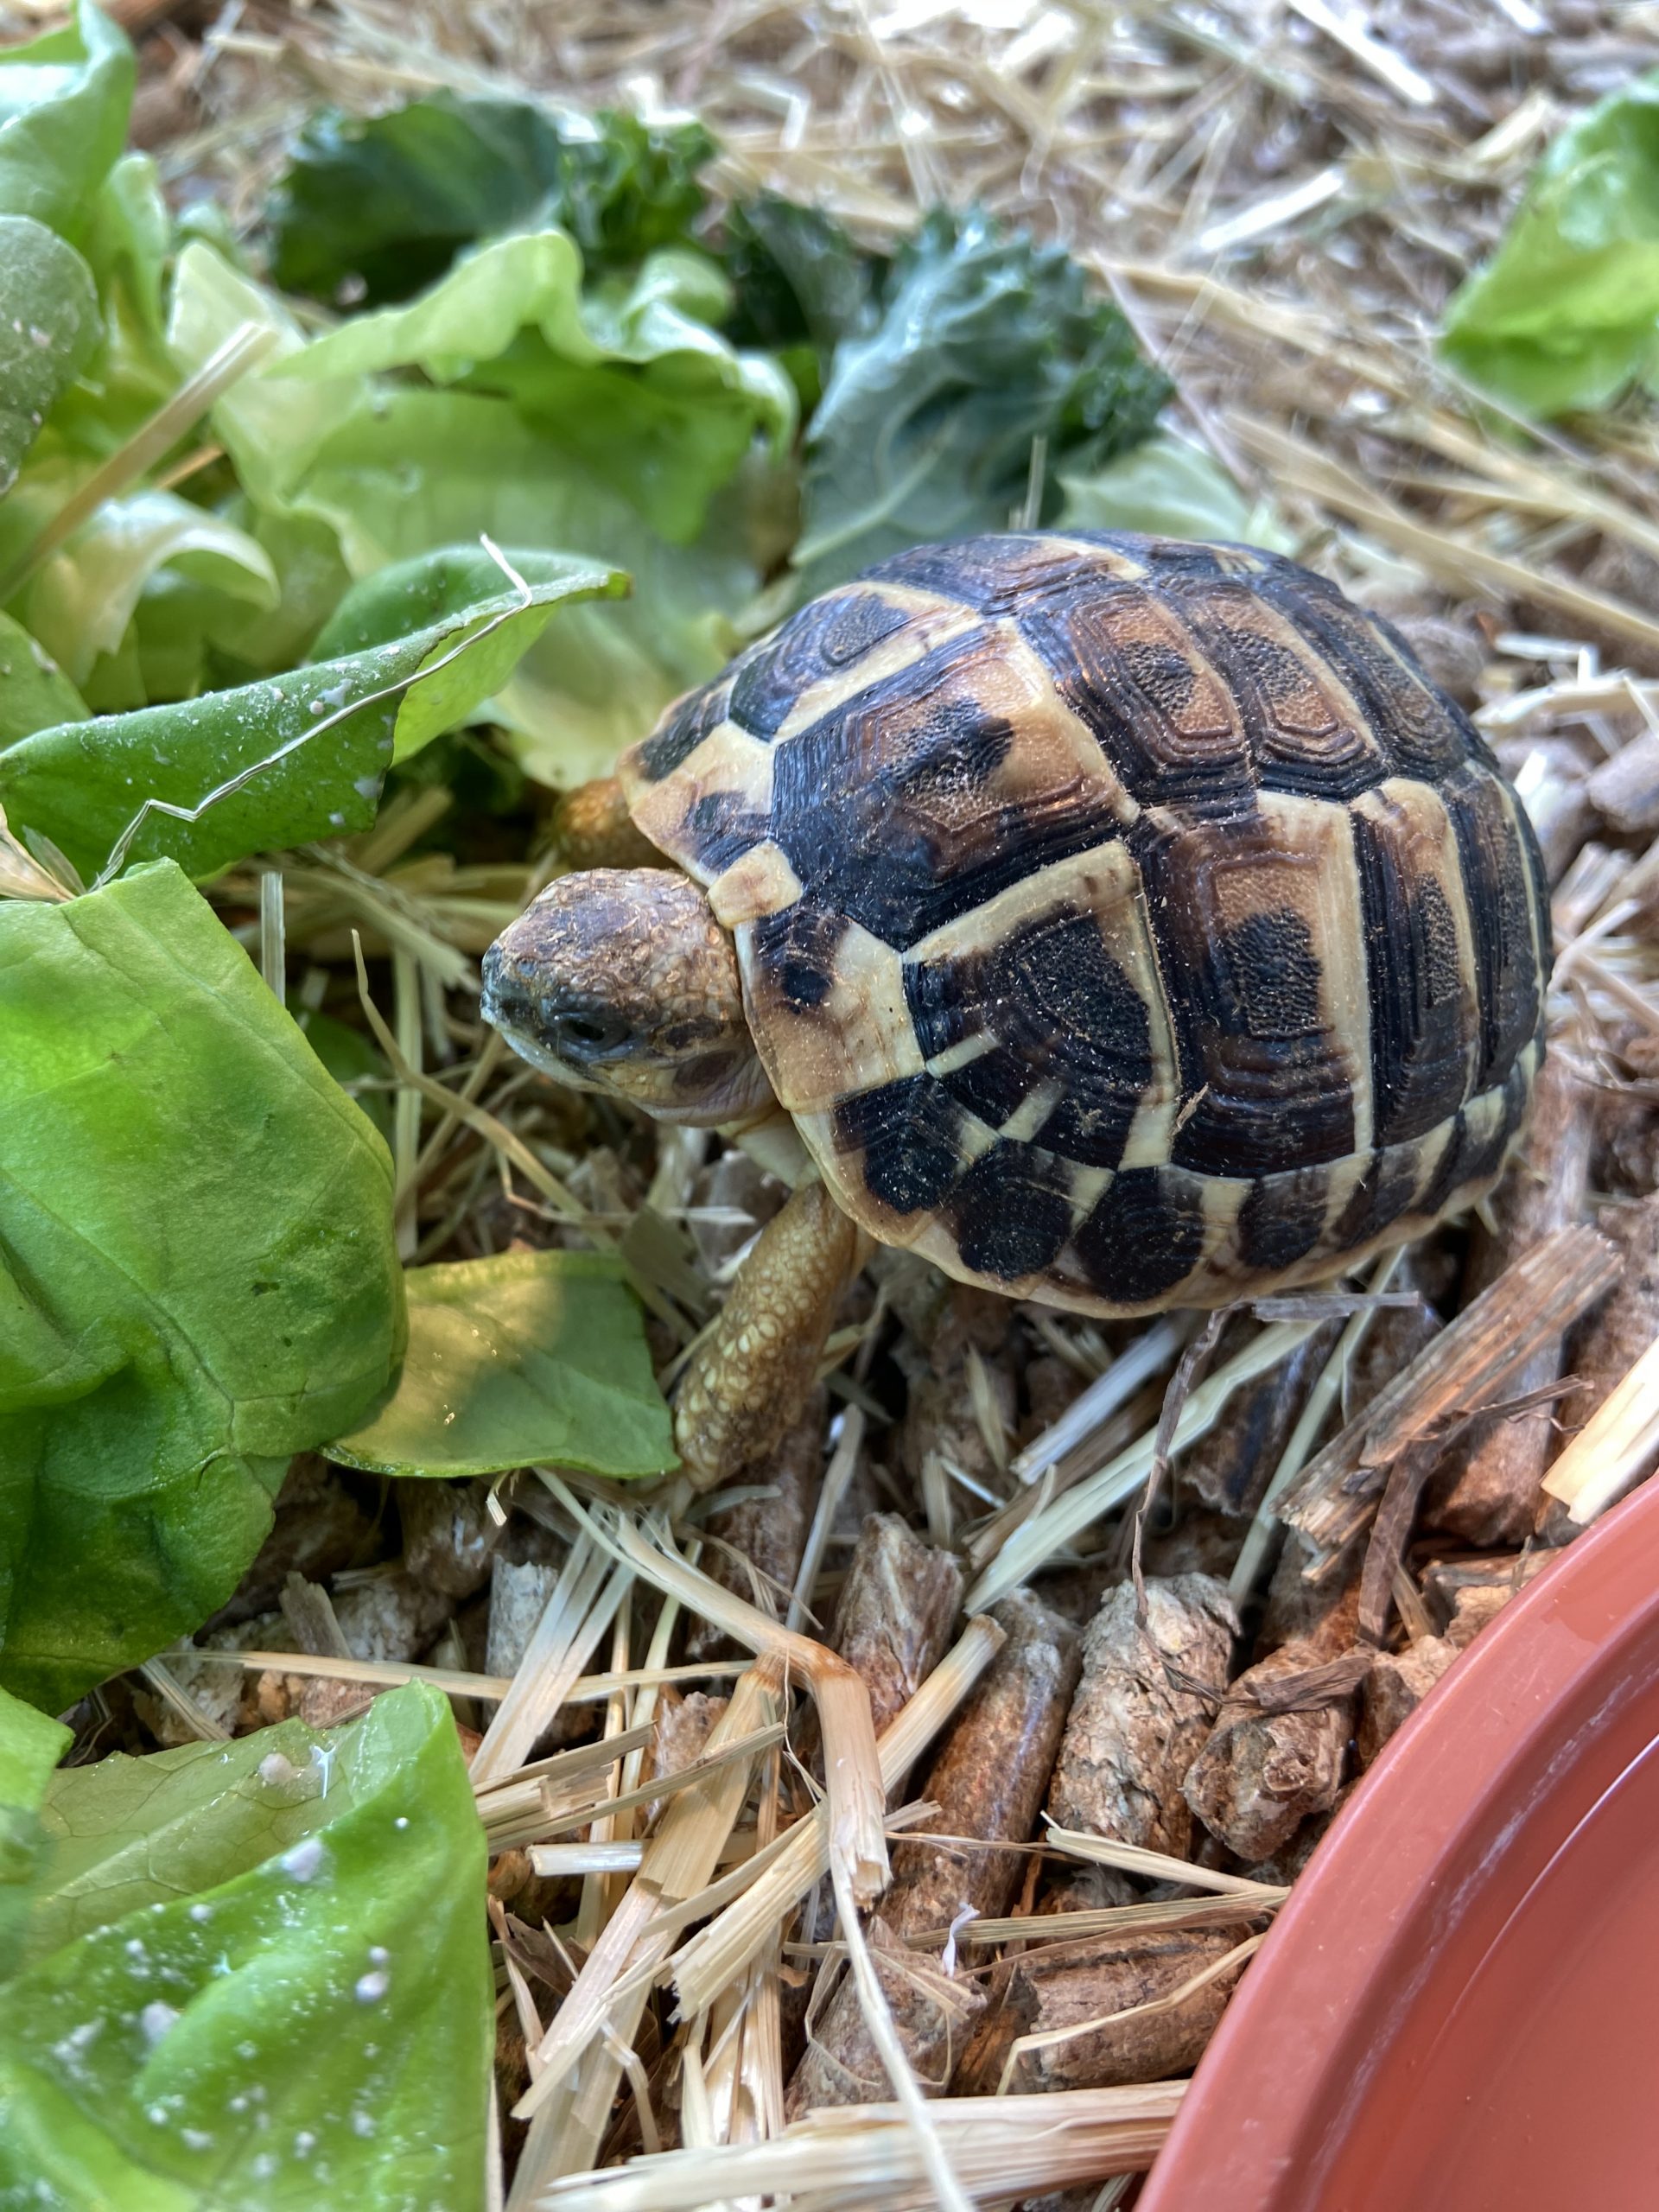 Dwarf Hermann’s tortoise